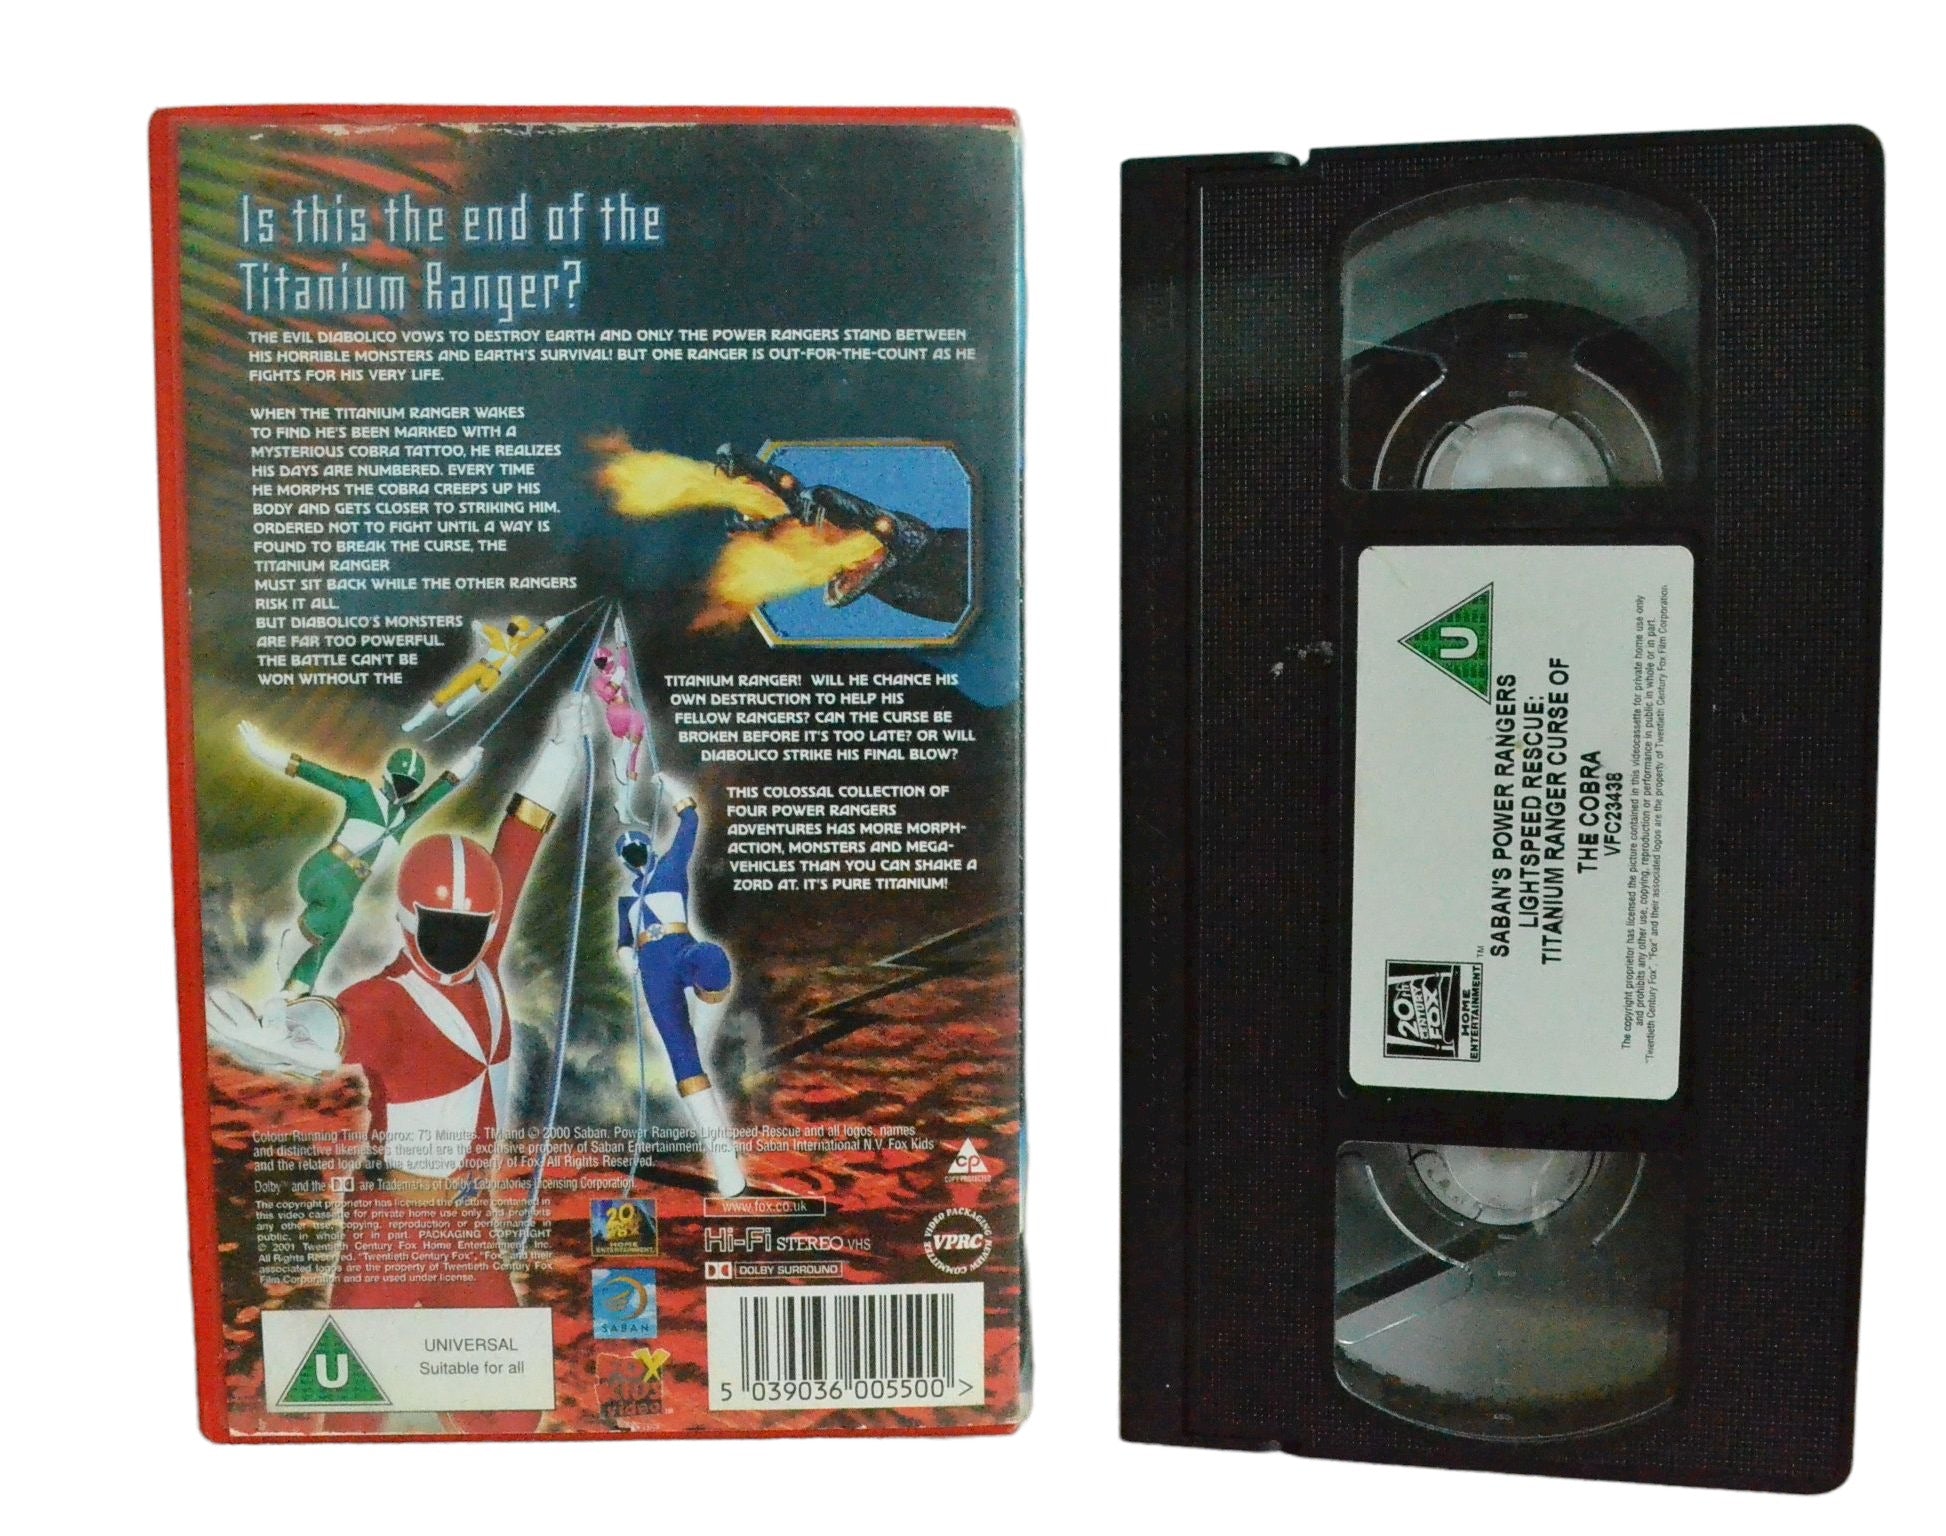 Saban's Power Rangers - Lightspeed Rescue Titanium Ranger Cusrse of the Cobra - Fox Kids Video - Childrens - Pal VHS-